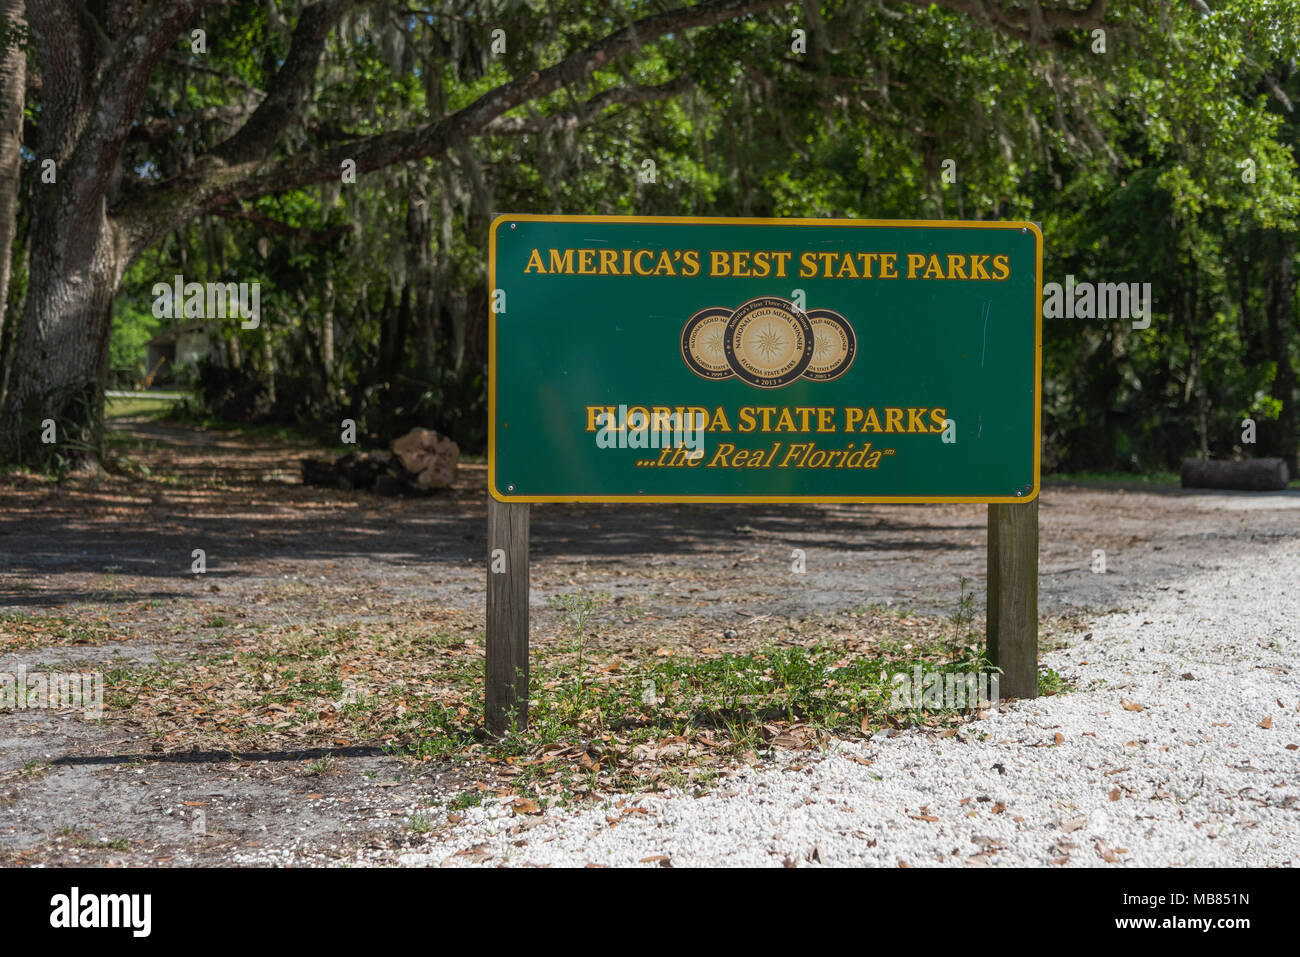 Americas Best State Parks Billboard declaring Florida State Parks the Real Florida... Americas first Three Time Winner. Stock Photo